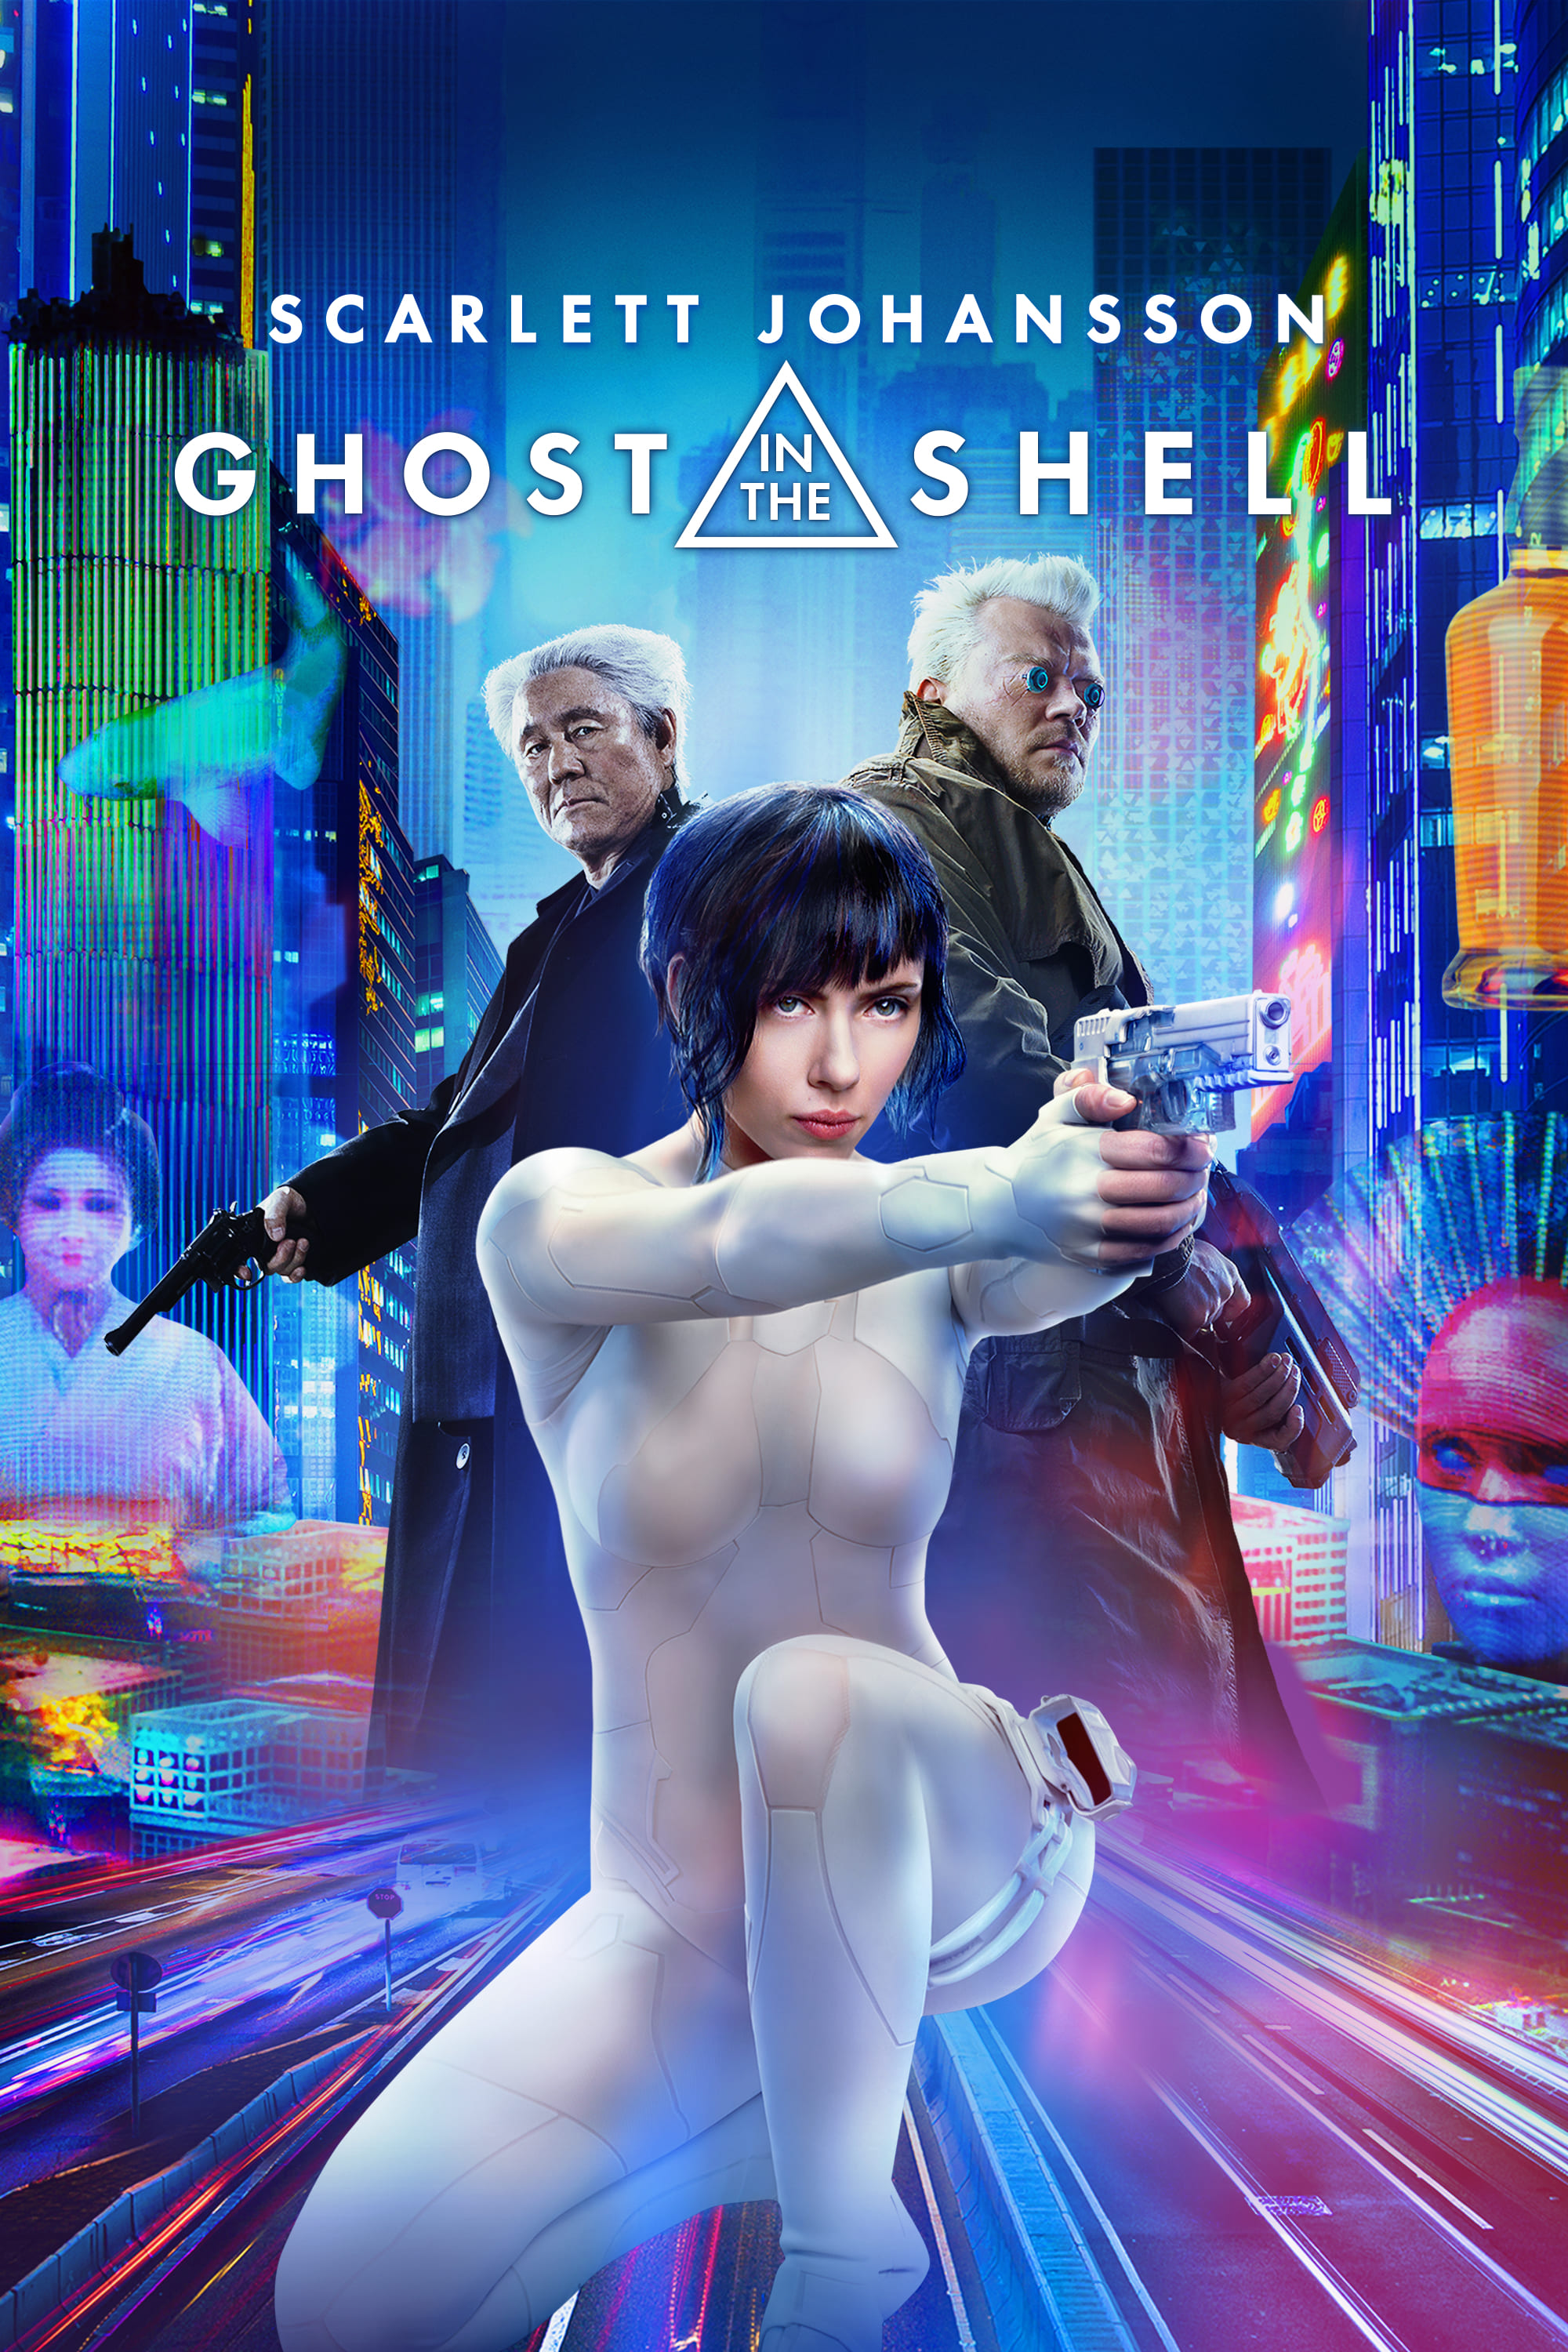 Plakat von "Ghost in the Shell"